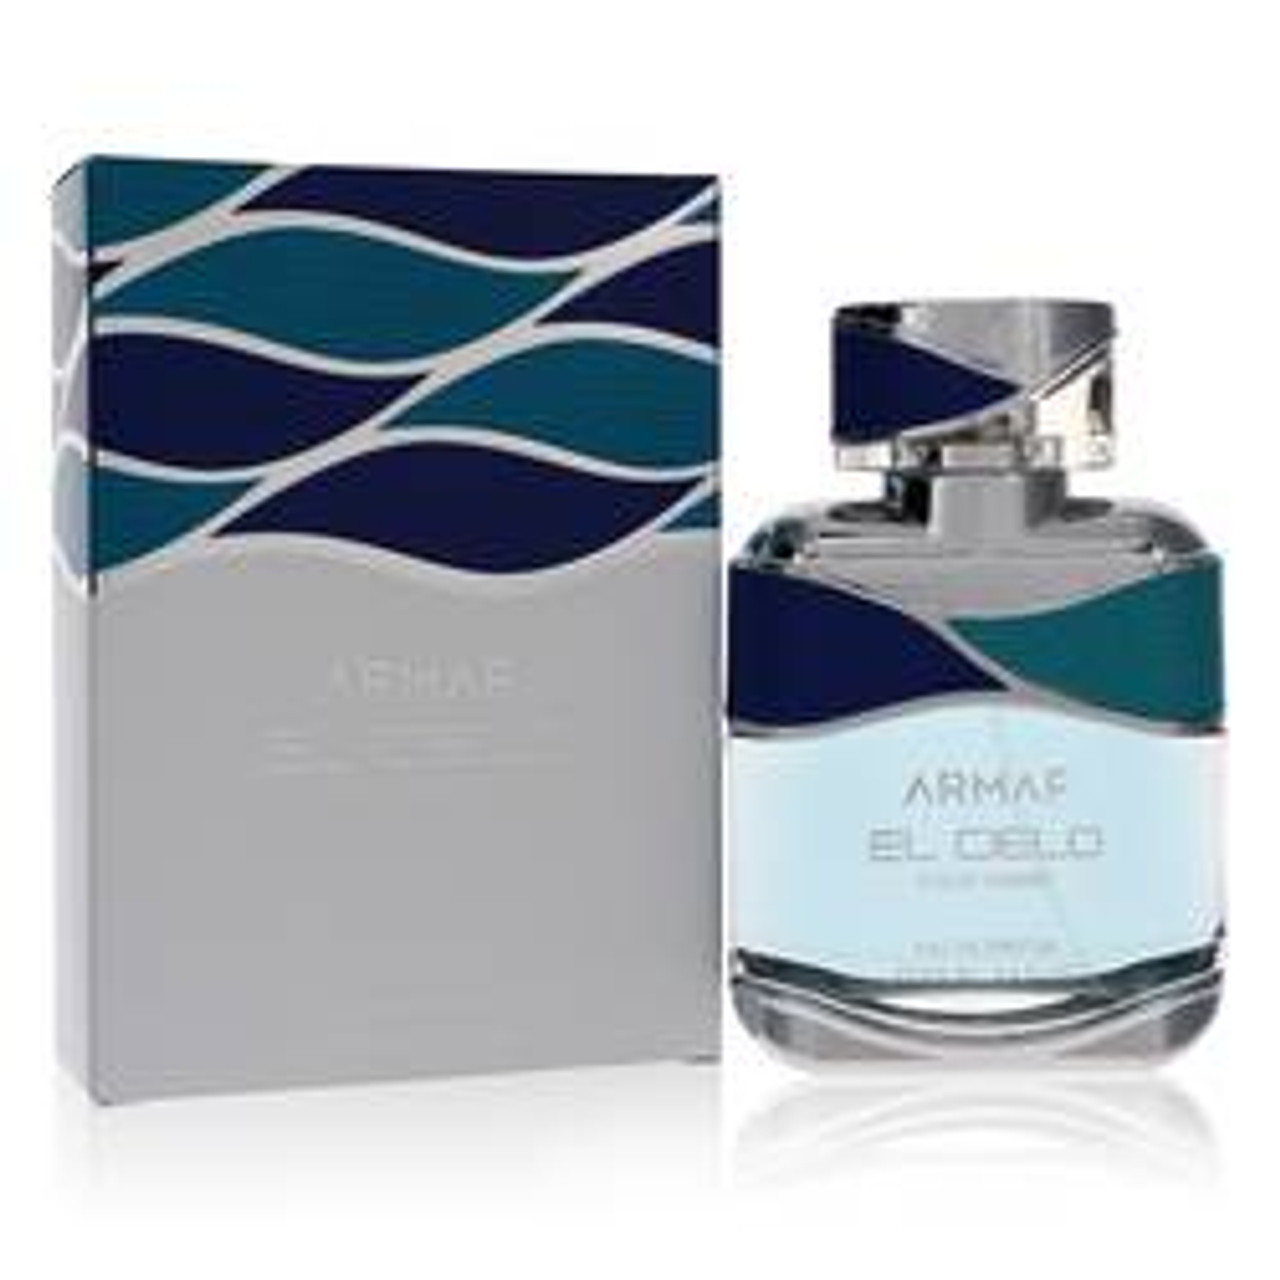 Armaf El Cielo Cologne By Armaf Eau De Parfum Spray 3.4 oz for Men - [From 116.00 - Choose pk Qty ] - *Ships from Miami